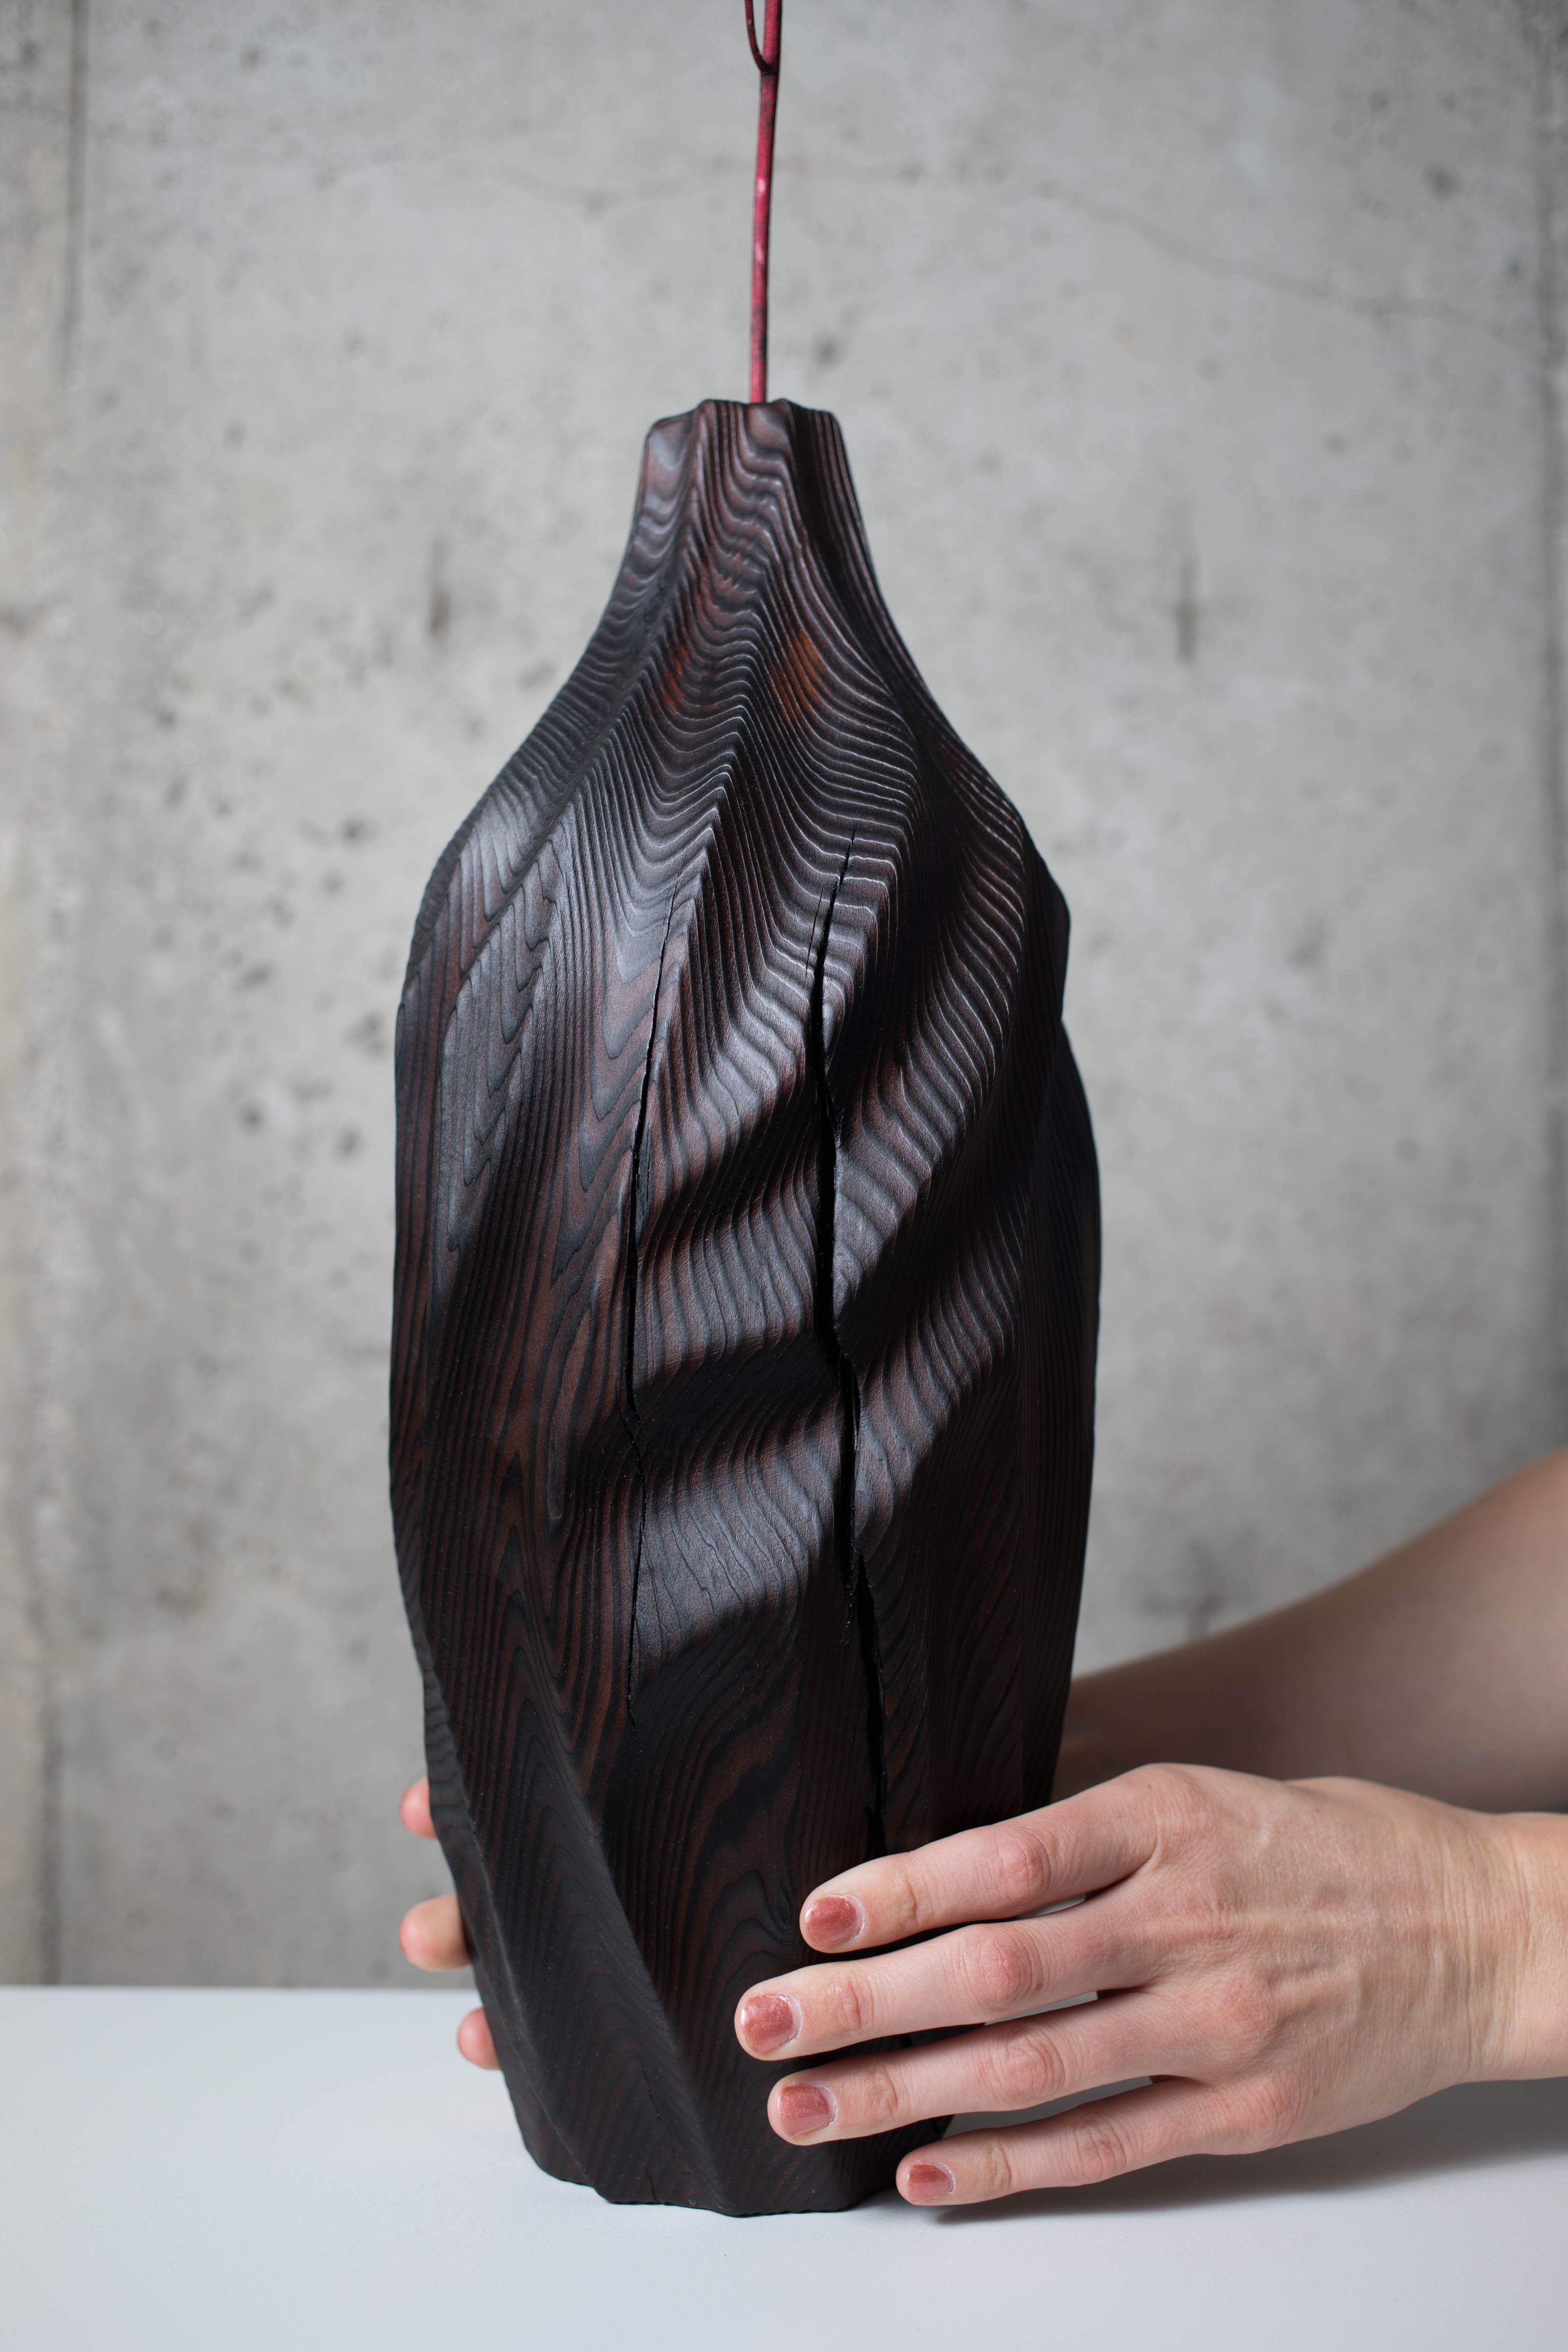 wooden vases to buy. Black sculpted vase held by artist.